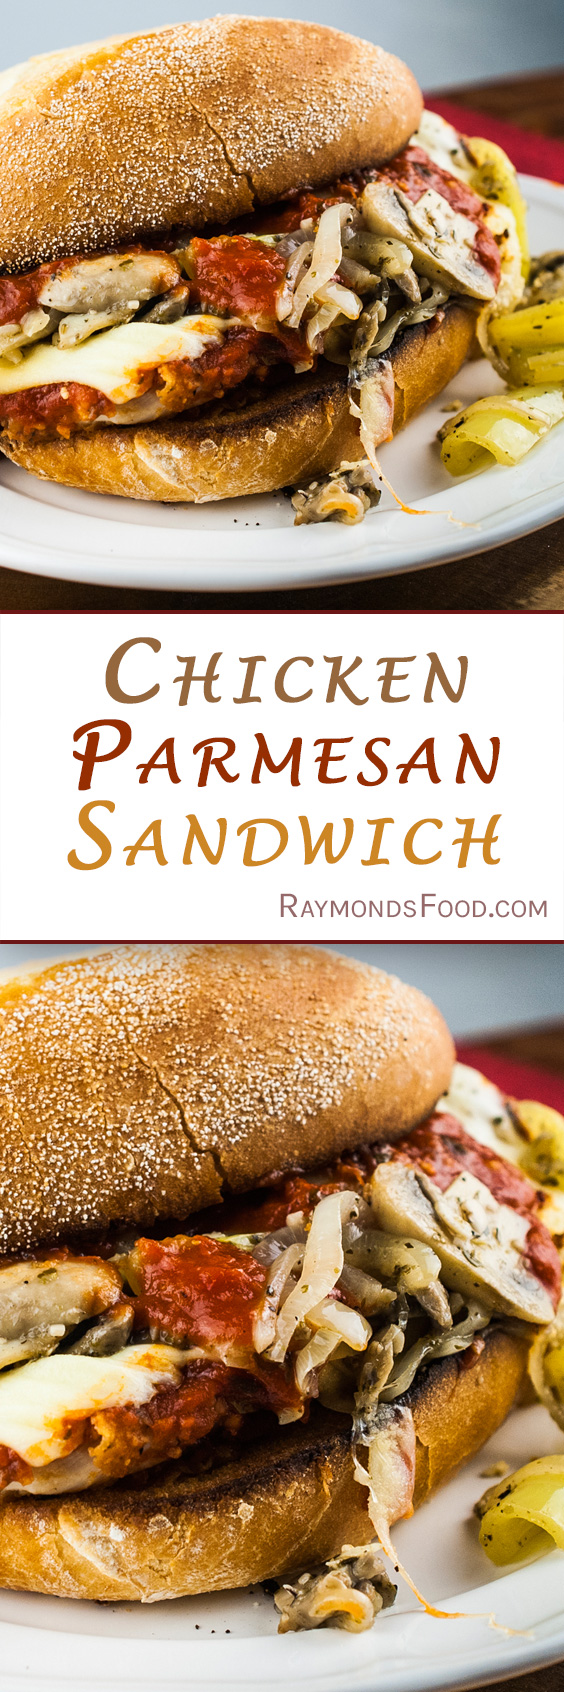 Raymond's Food | Chicken Parmesan Sandwich